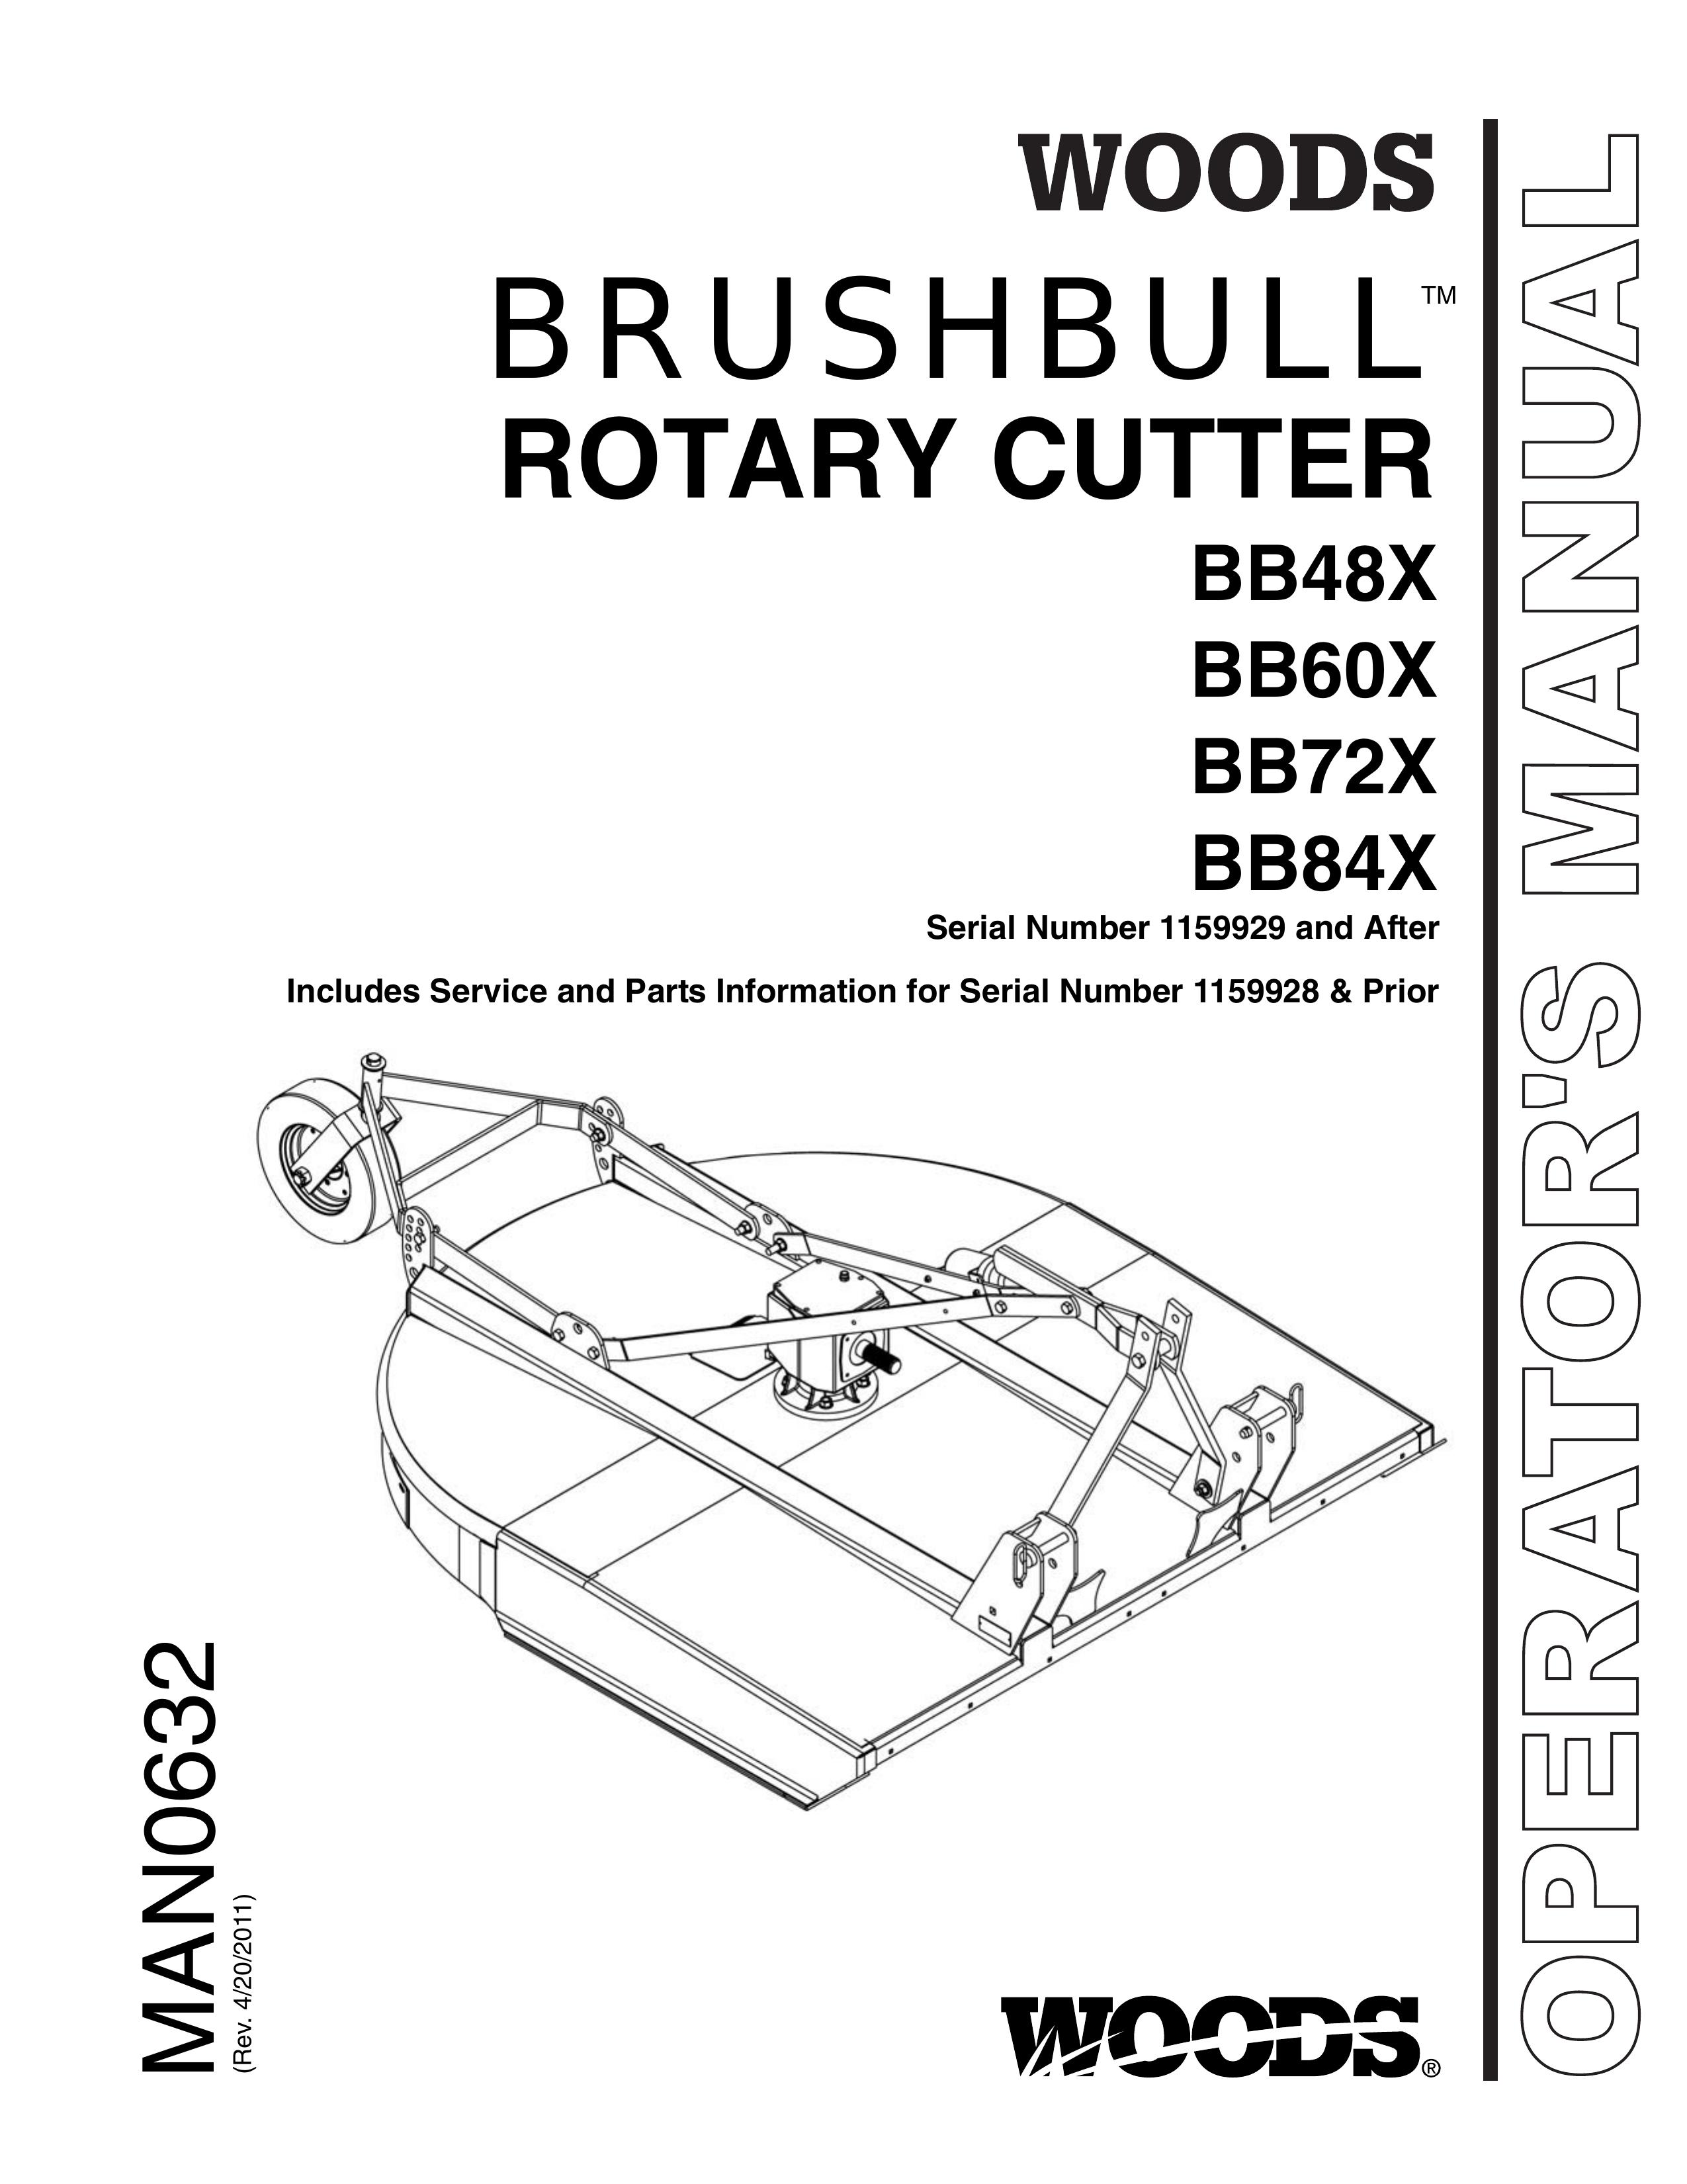 Woods Equipment BB60X Brush Cutter User Manual